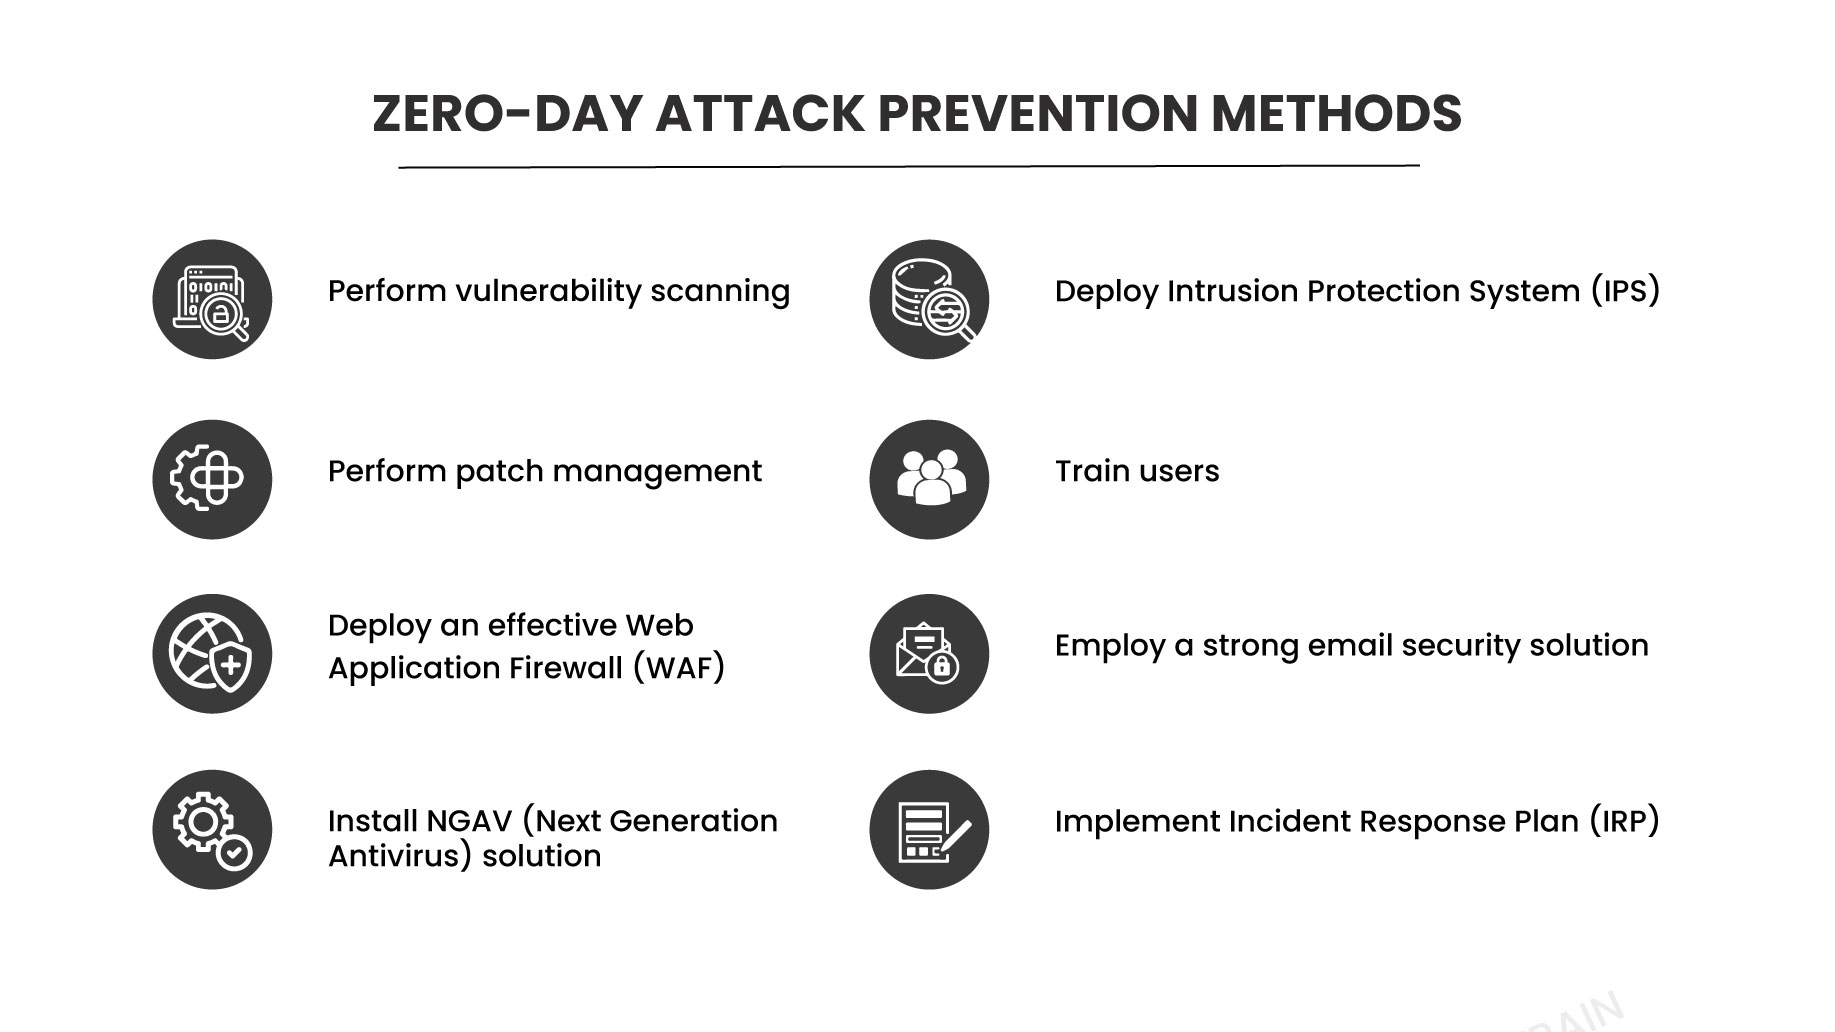 Zero-day attack prevention methods